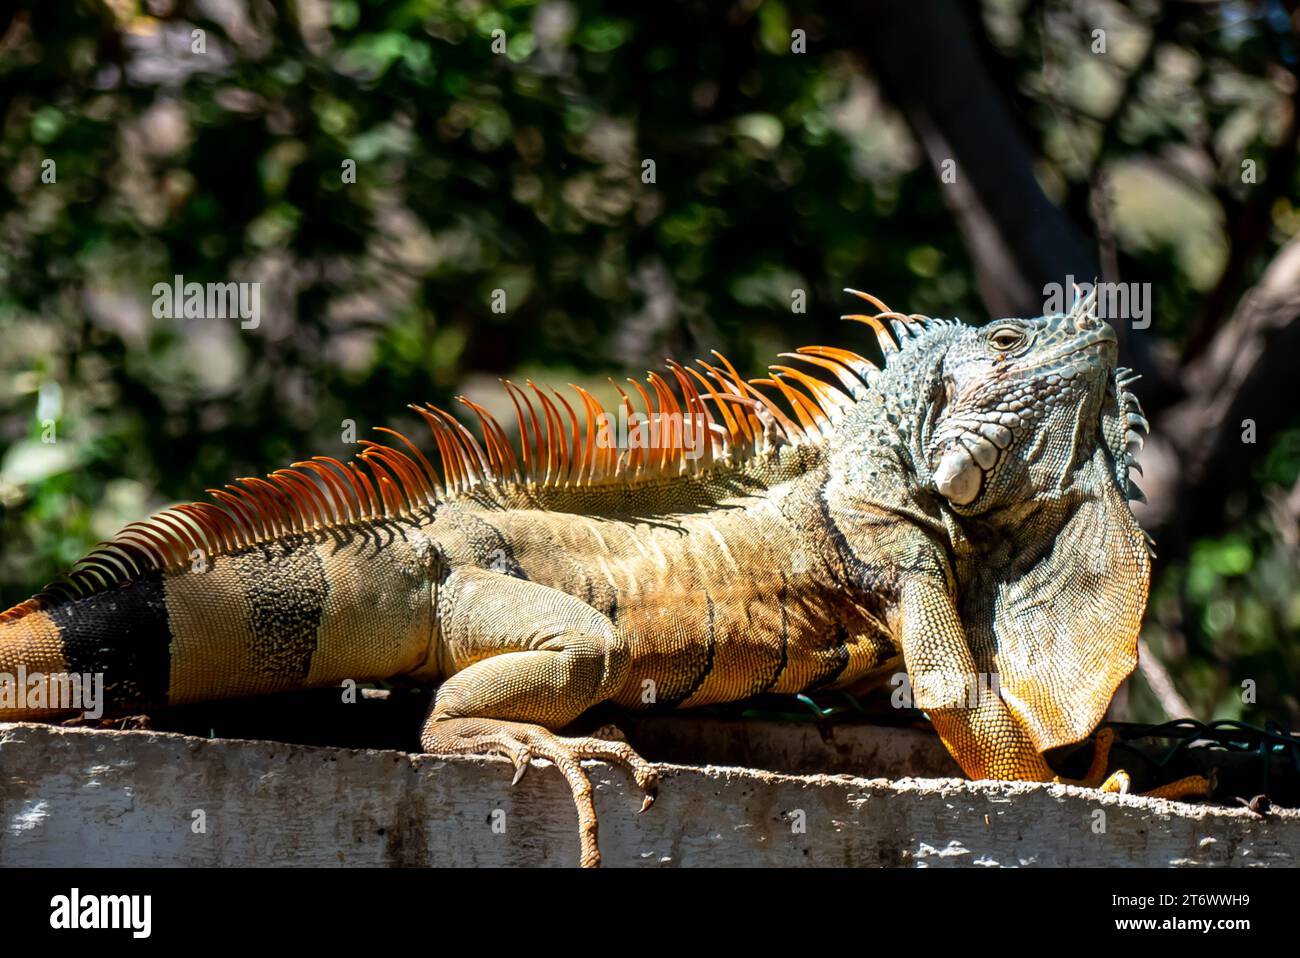 Manzanillo in Mexico: iguanas in an animal sanctuary Stock Photo